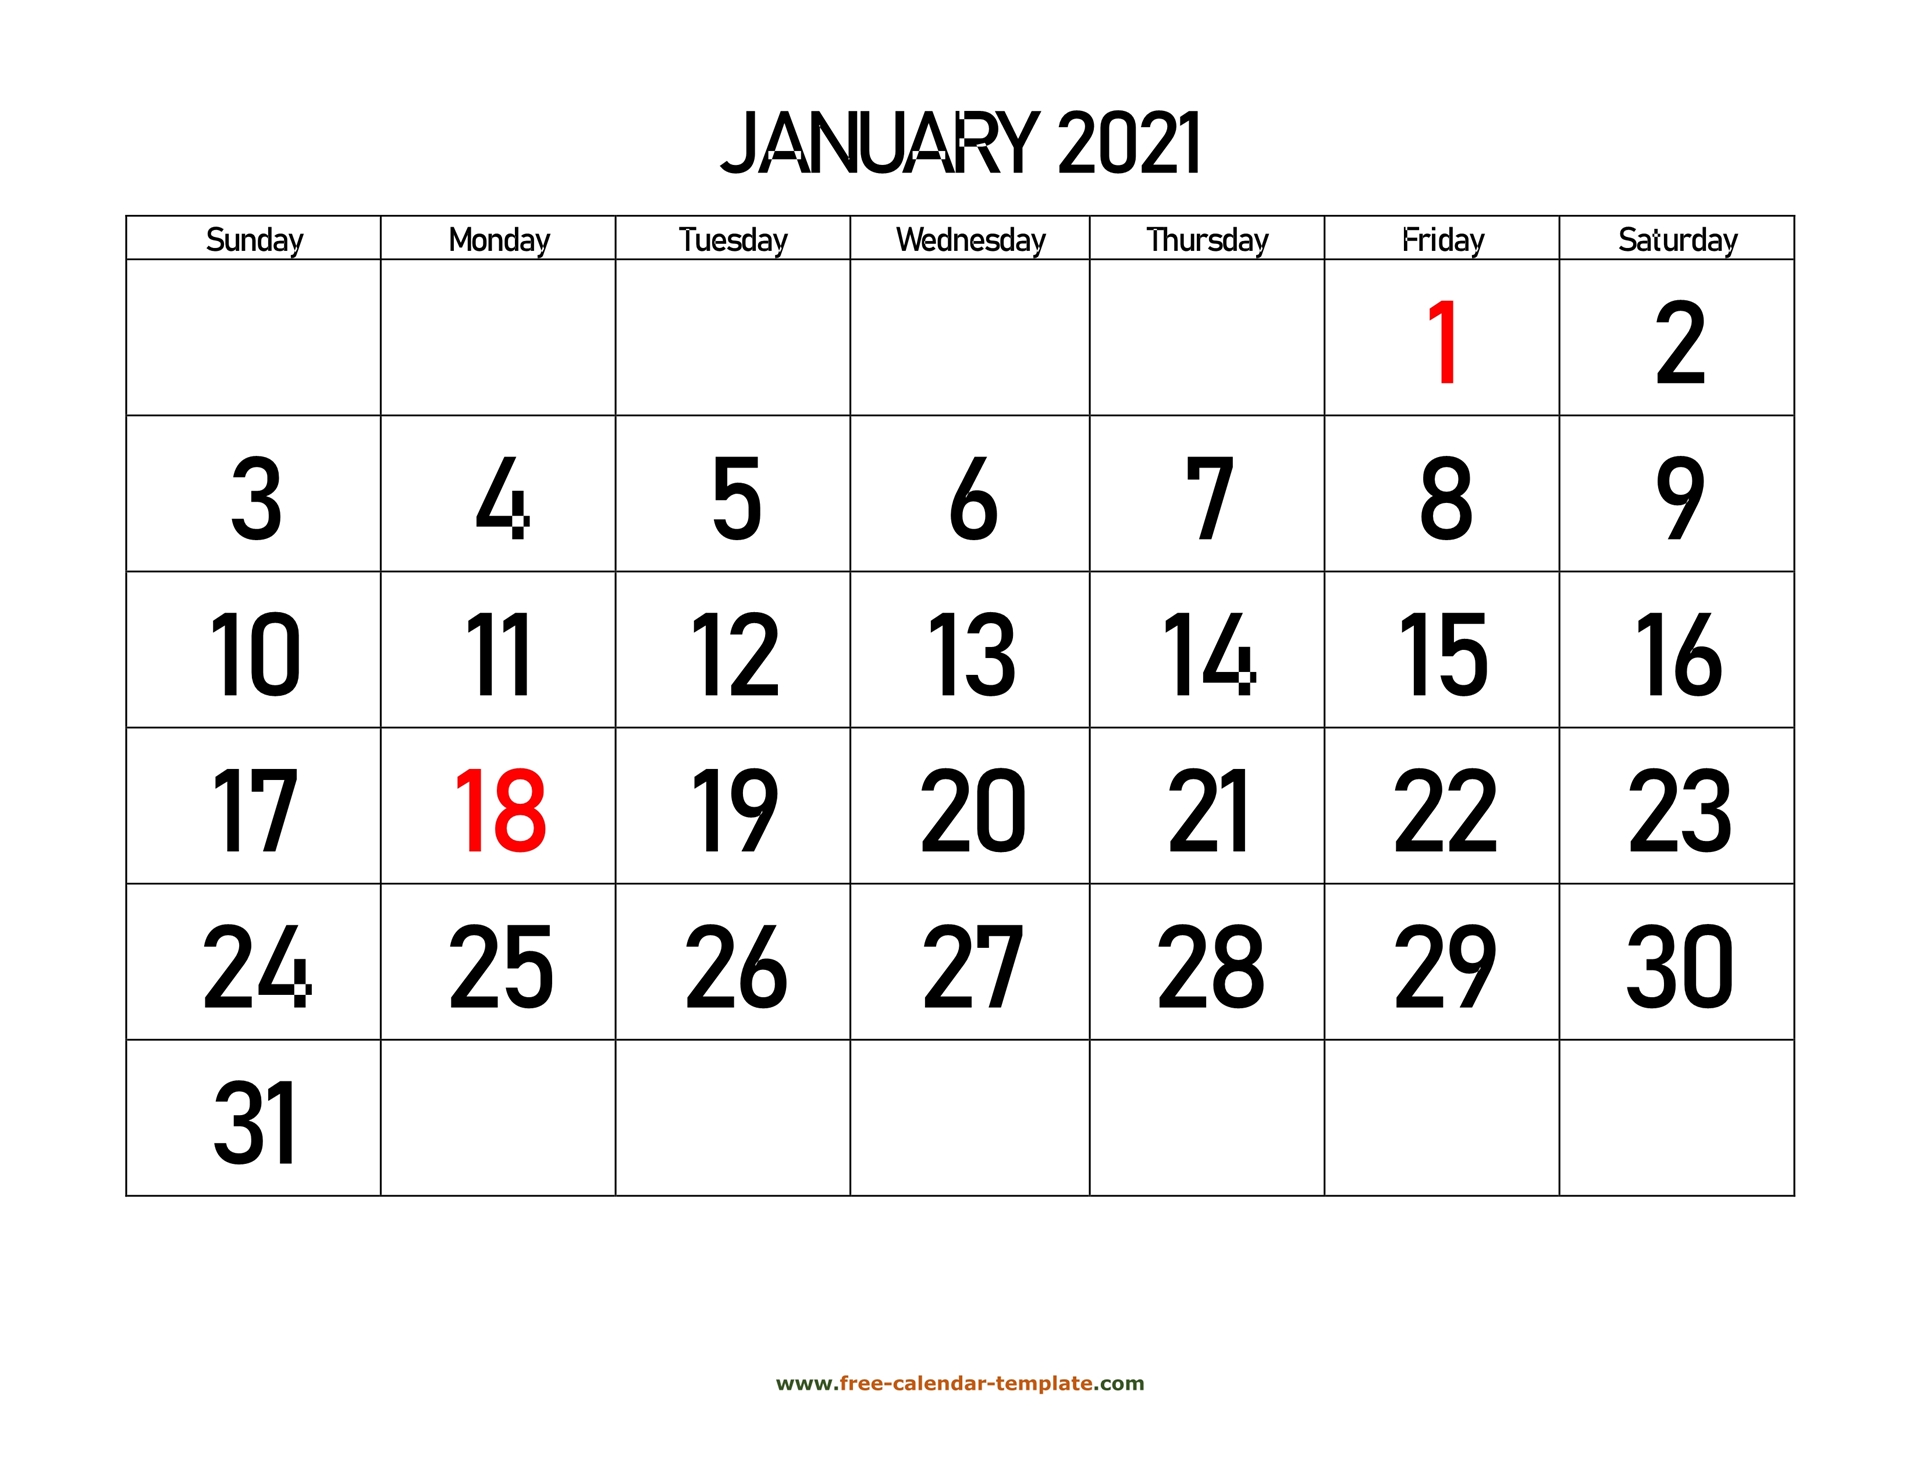 January 2021 Free Calendar Tempplate Free Calendar Template Com